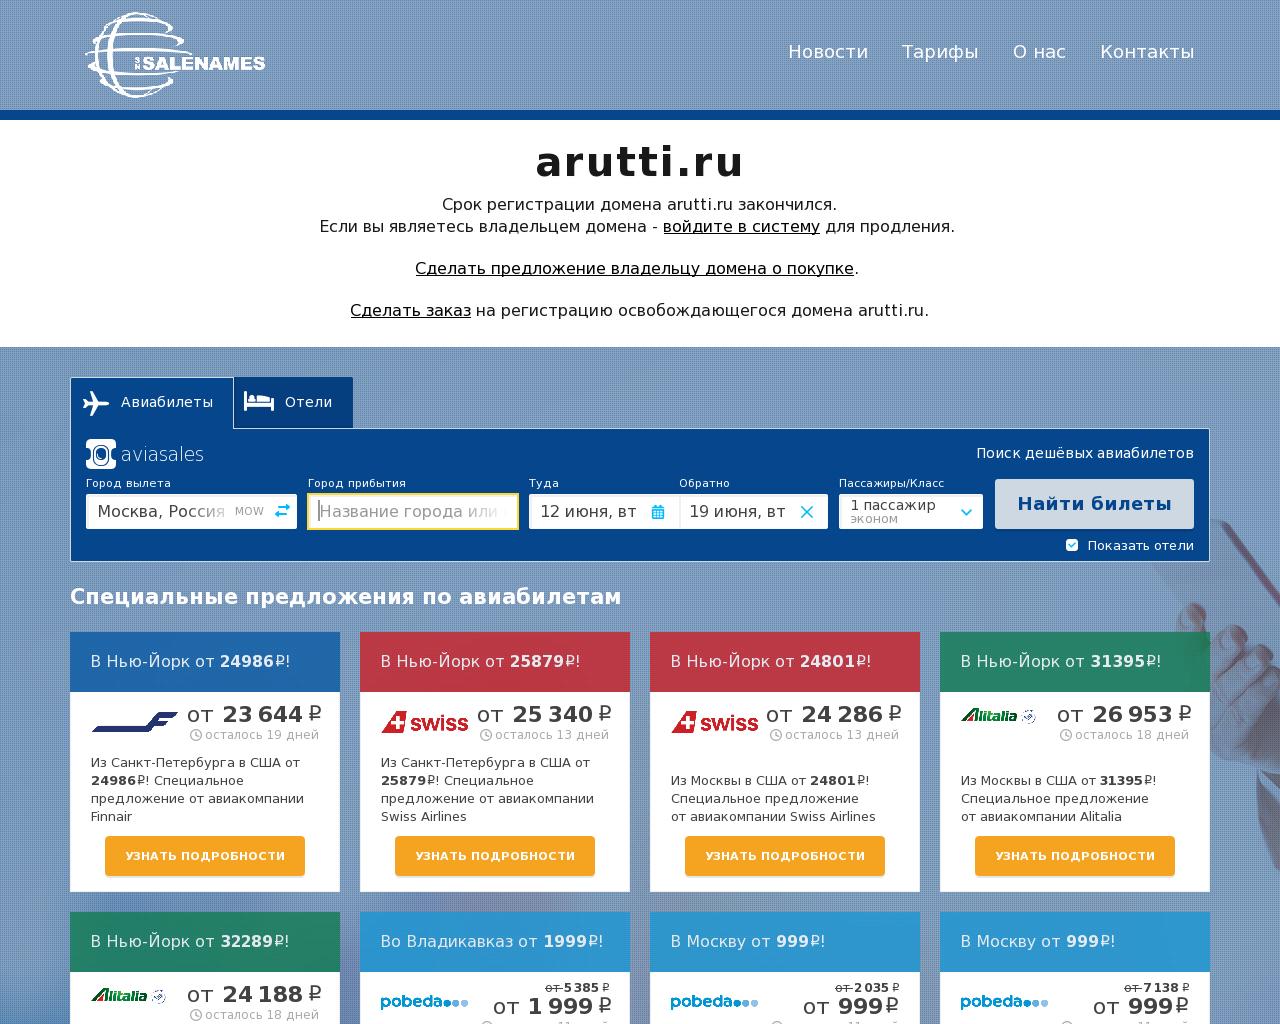 Изображение сайта arutti.ru в разрешении 1280x1024